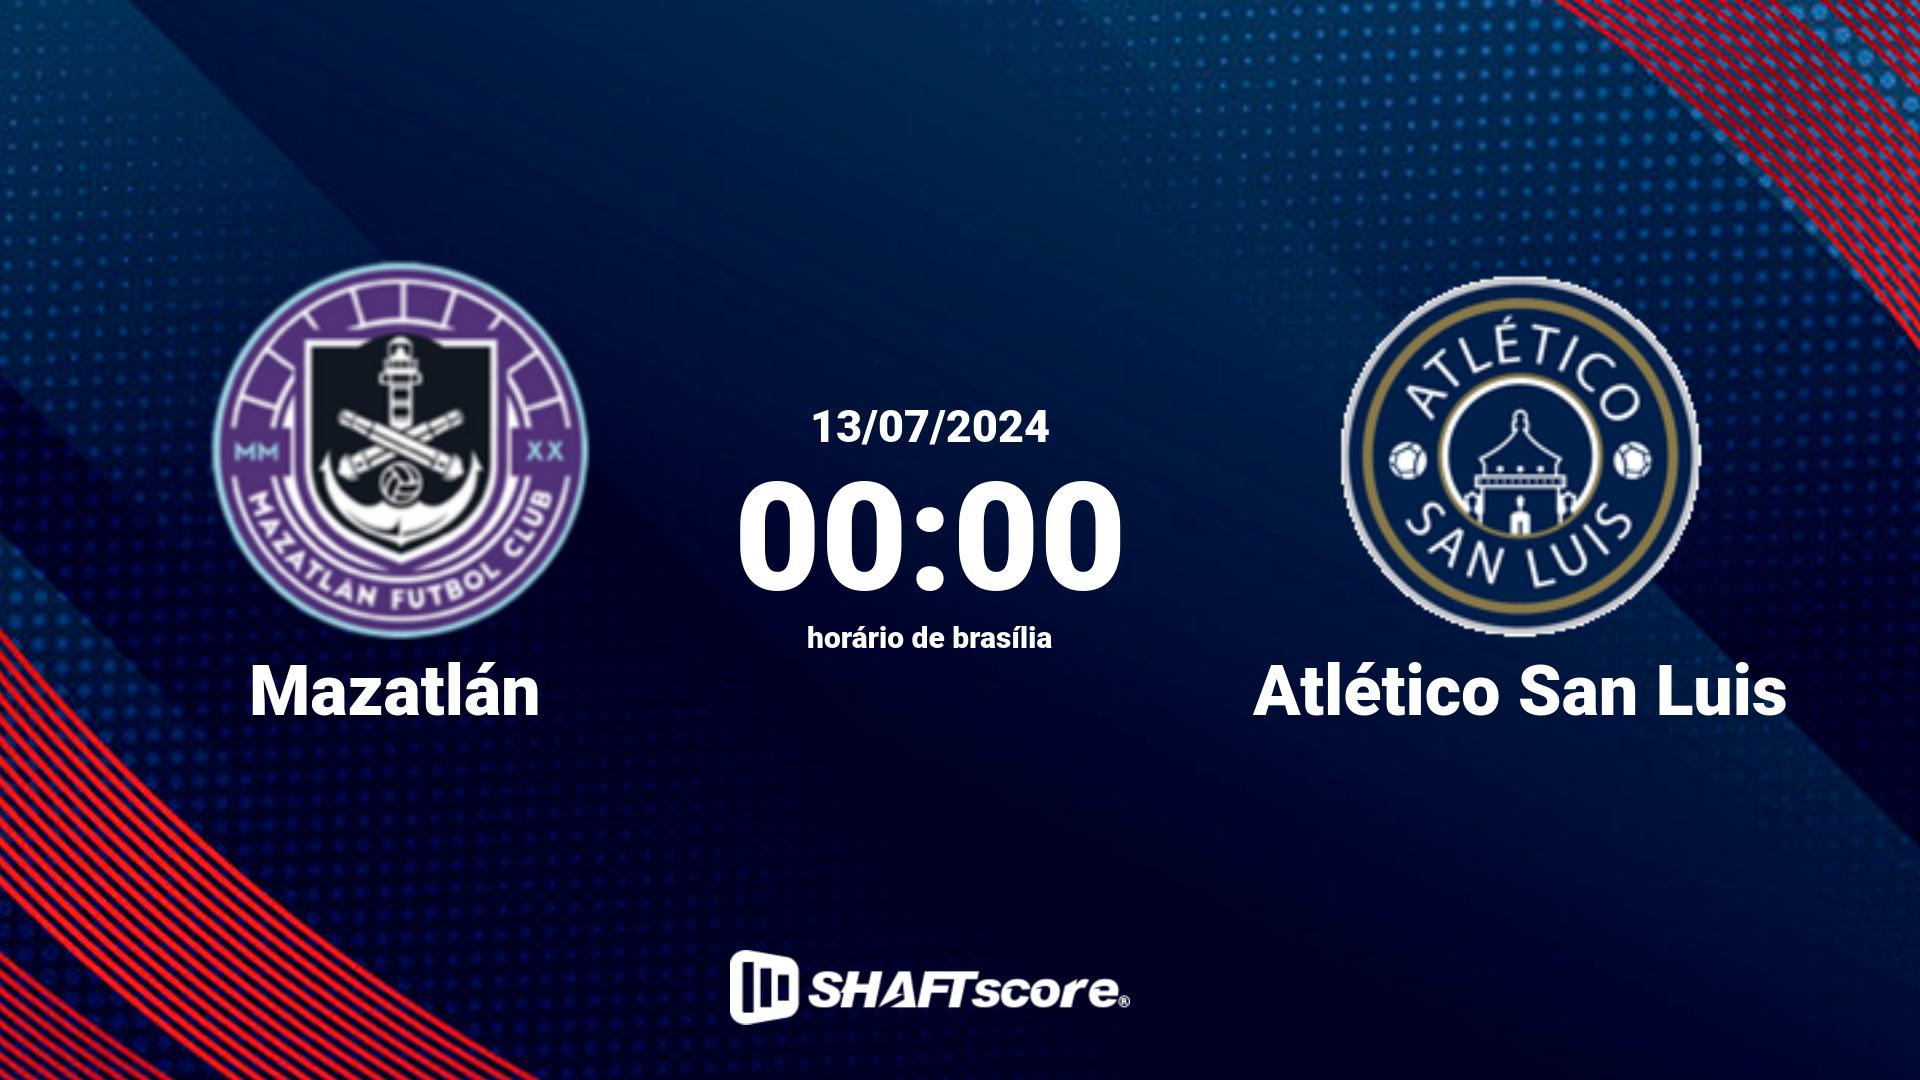 Estatísticas do jogo Mazatlán vs Atlético San Luis 13.07 00:00